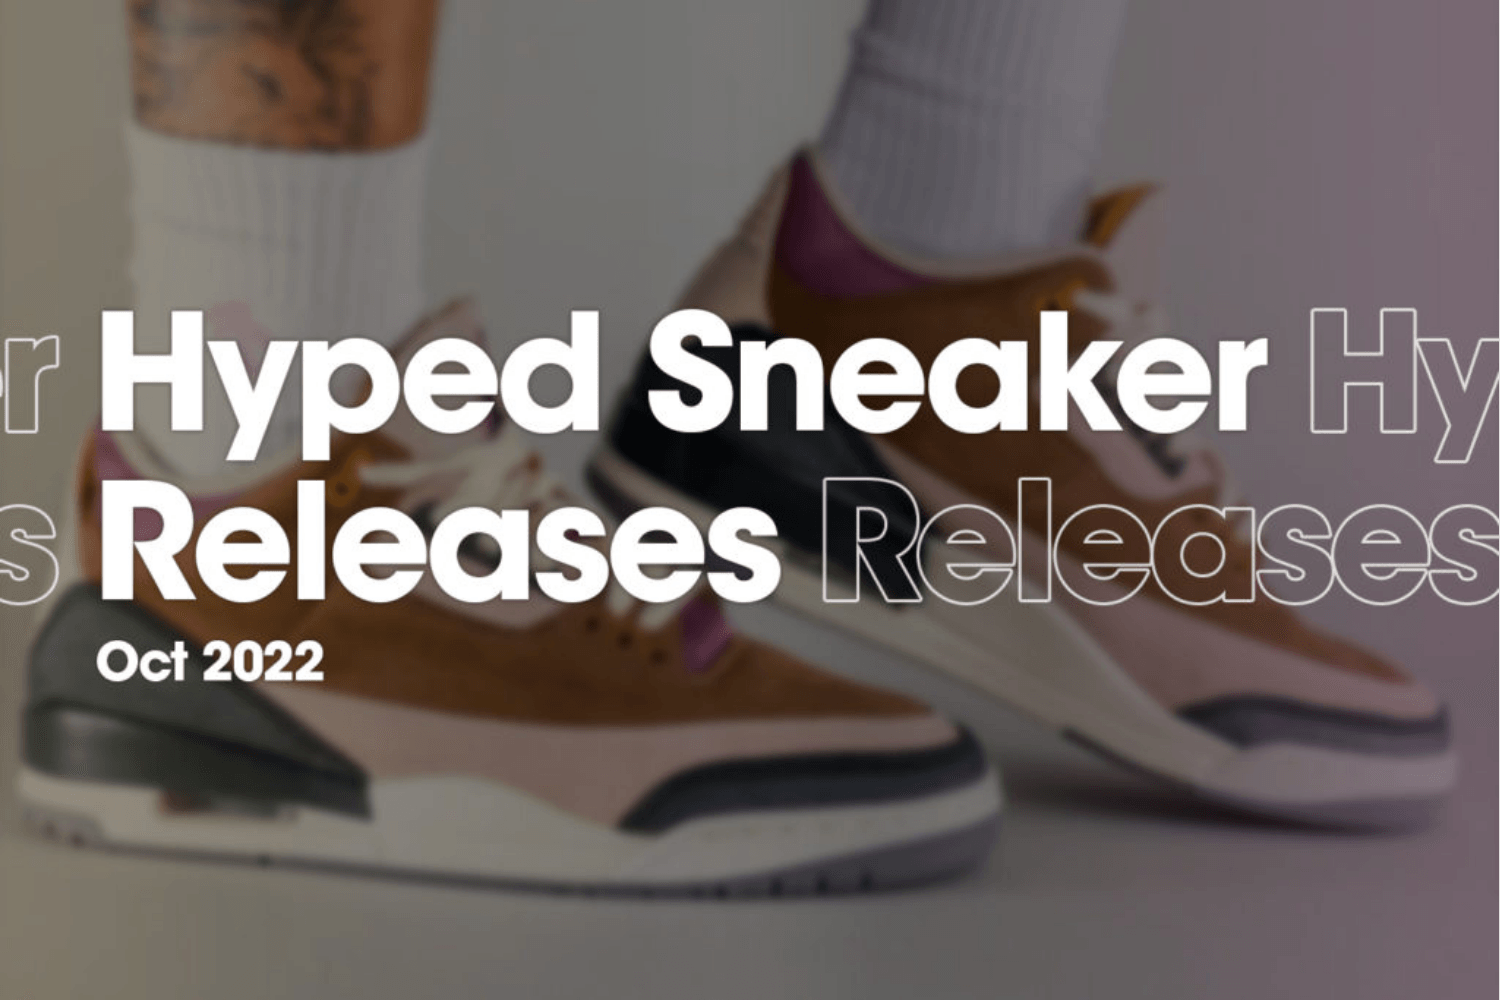 Die Hyped Sneaker Releases von Oktober 2022